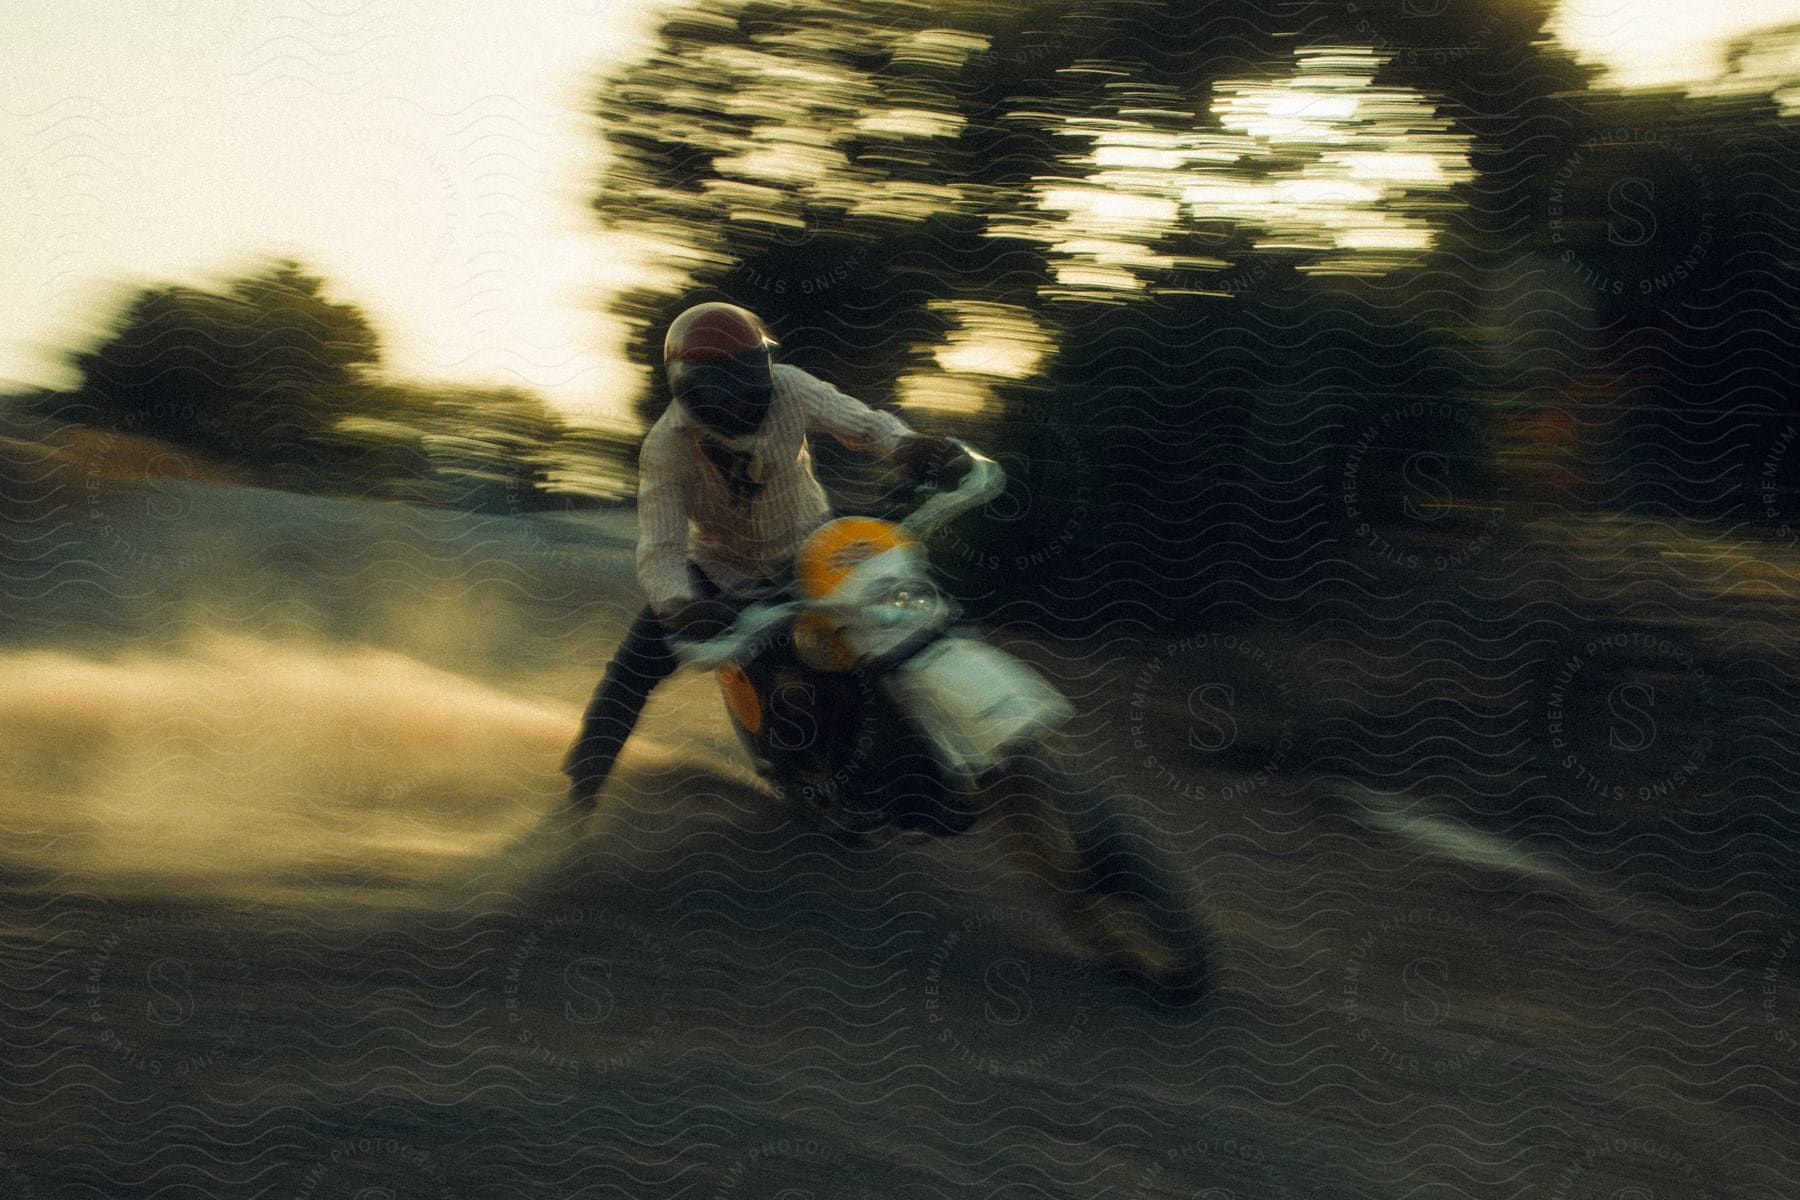 Man performing motocross tricks on his motorcycle.